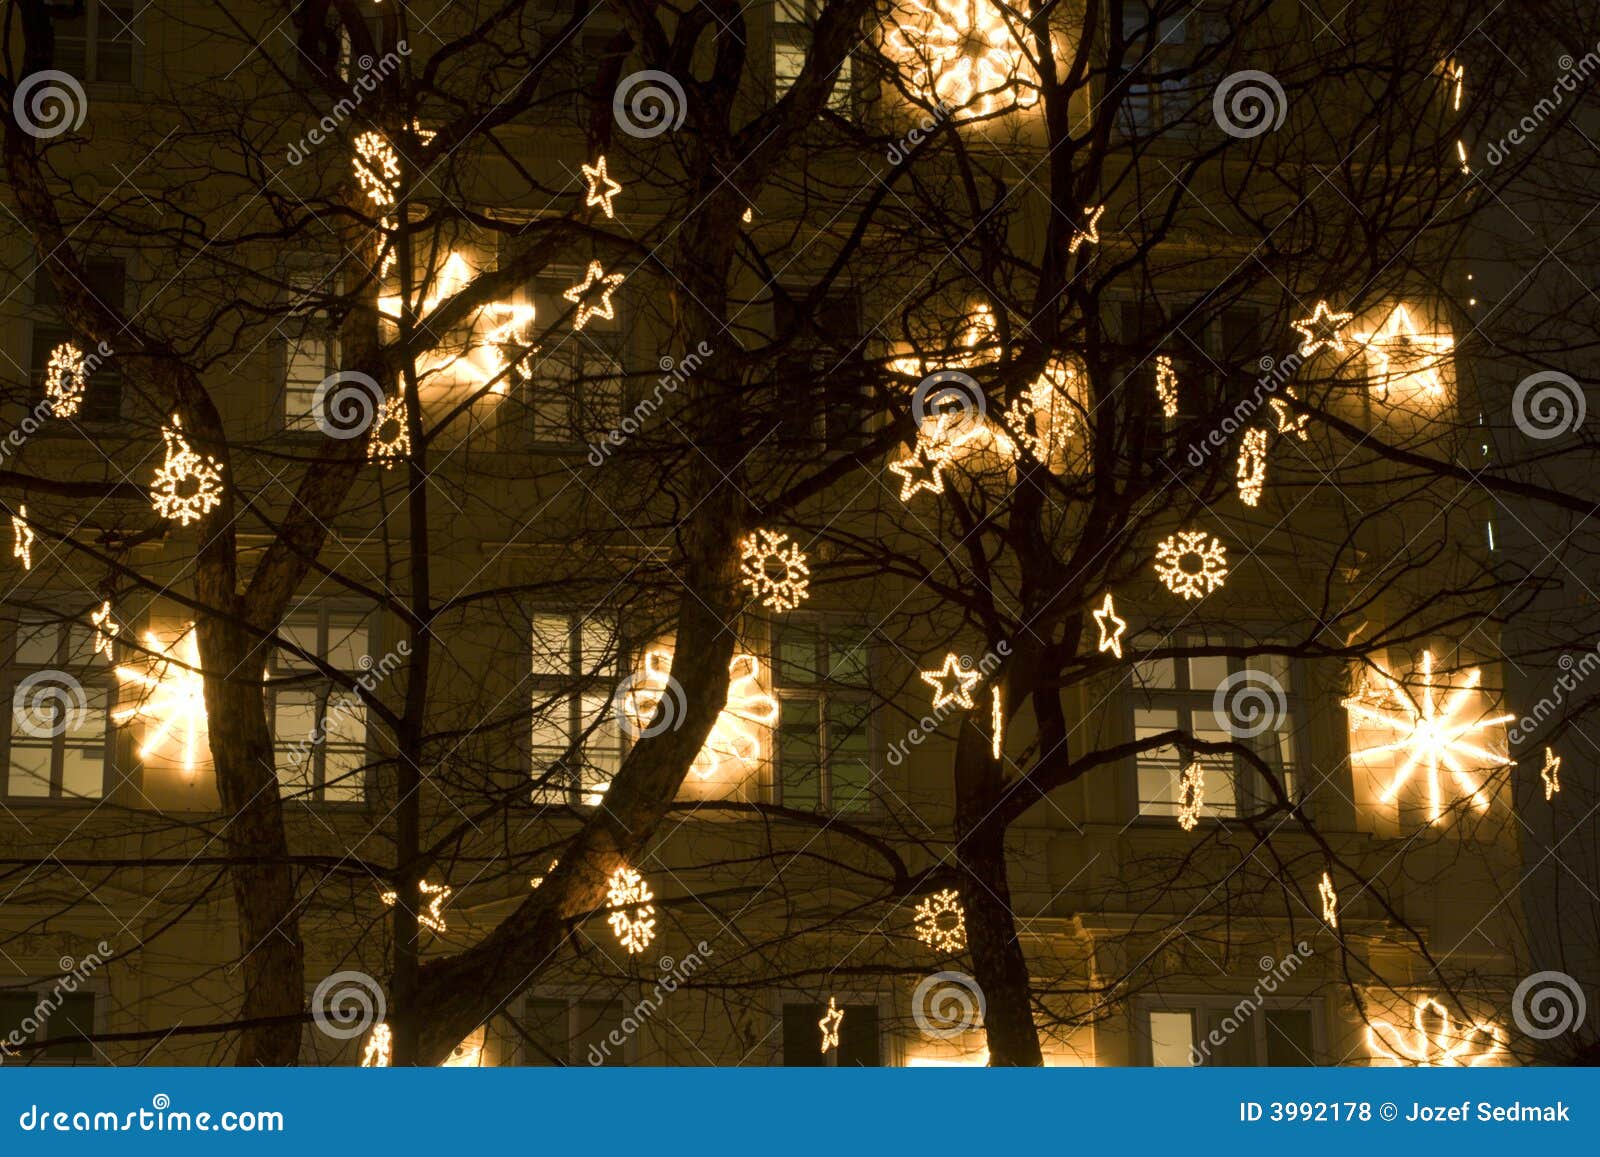 christmas-decoration-vienna-3992178.jpg